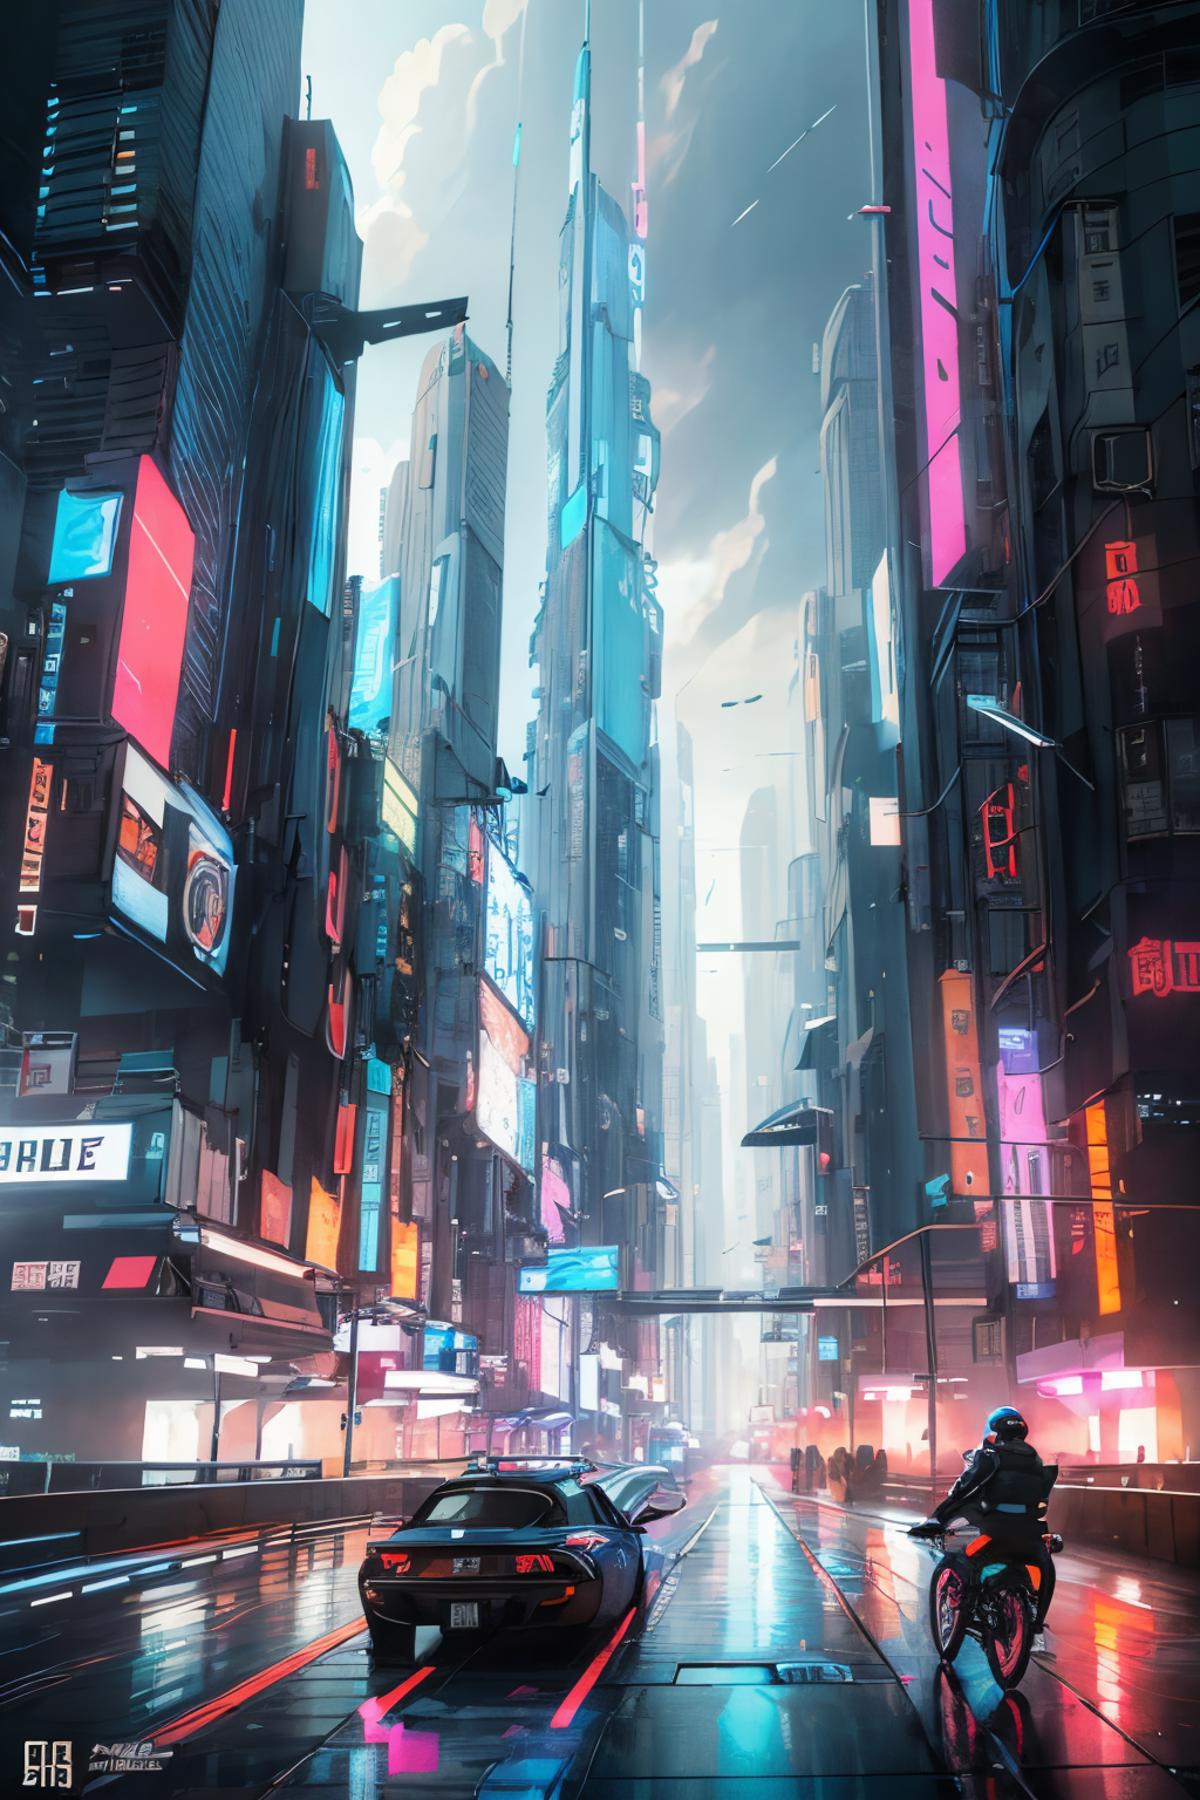 Futuristic City Scene with Skyscrapers and Neon Lights